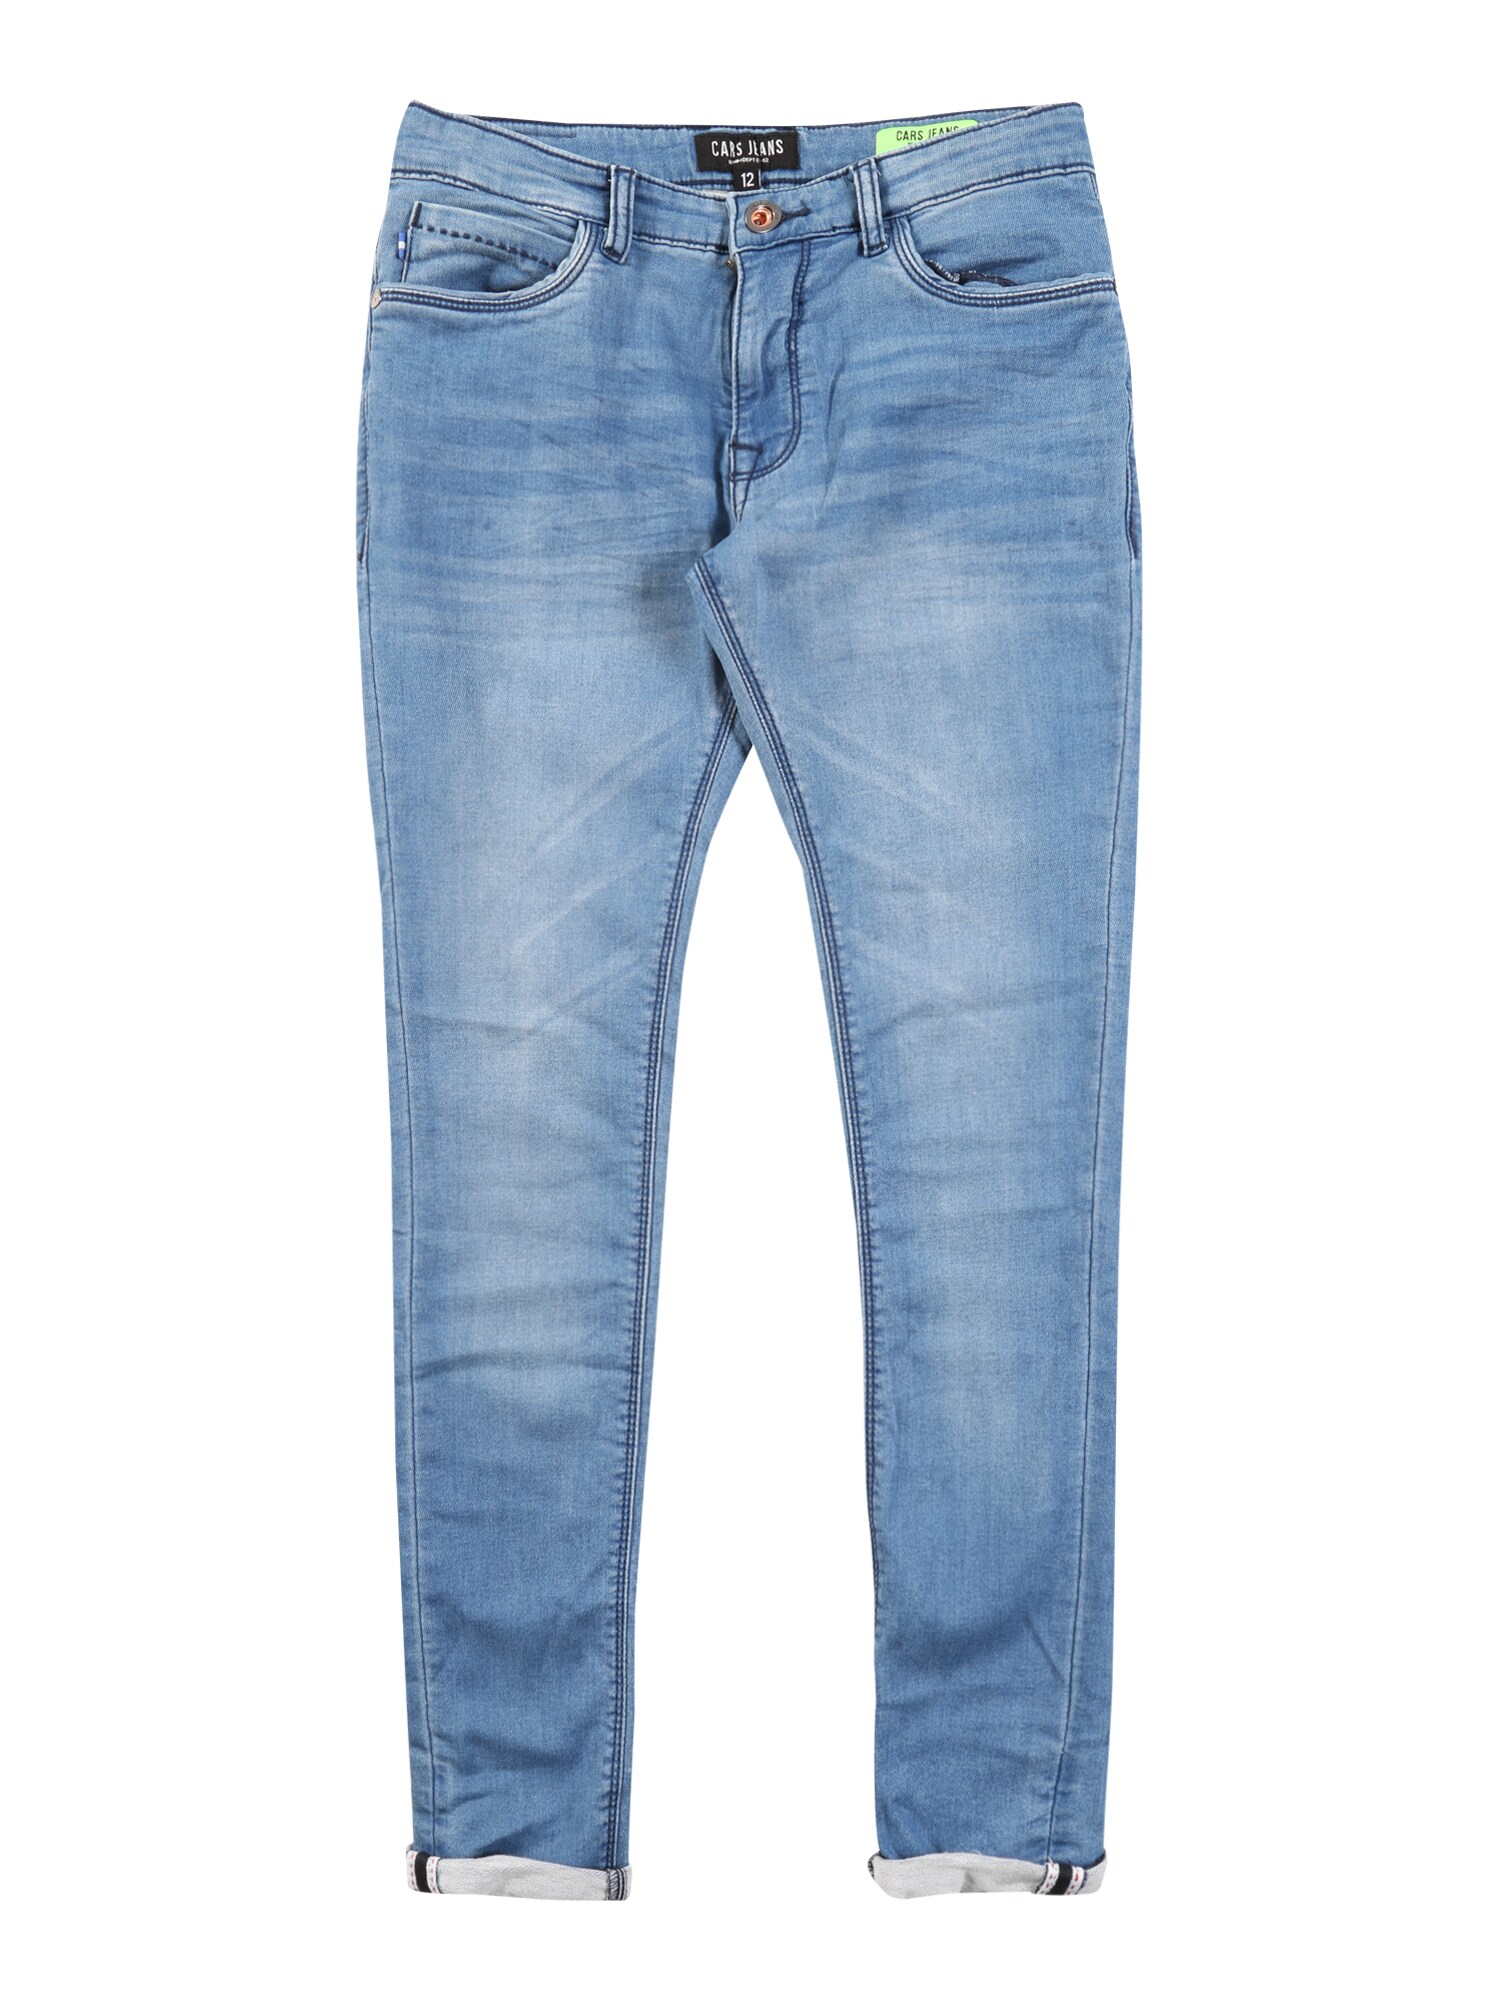 Cars Jeans Džinsai 'ABURGO'  tamsiai (džinso) mėlyna